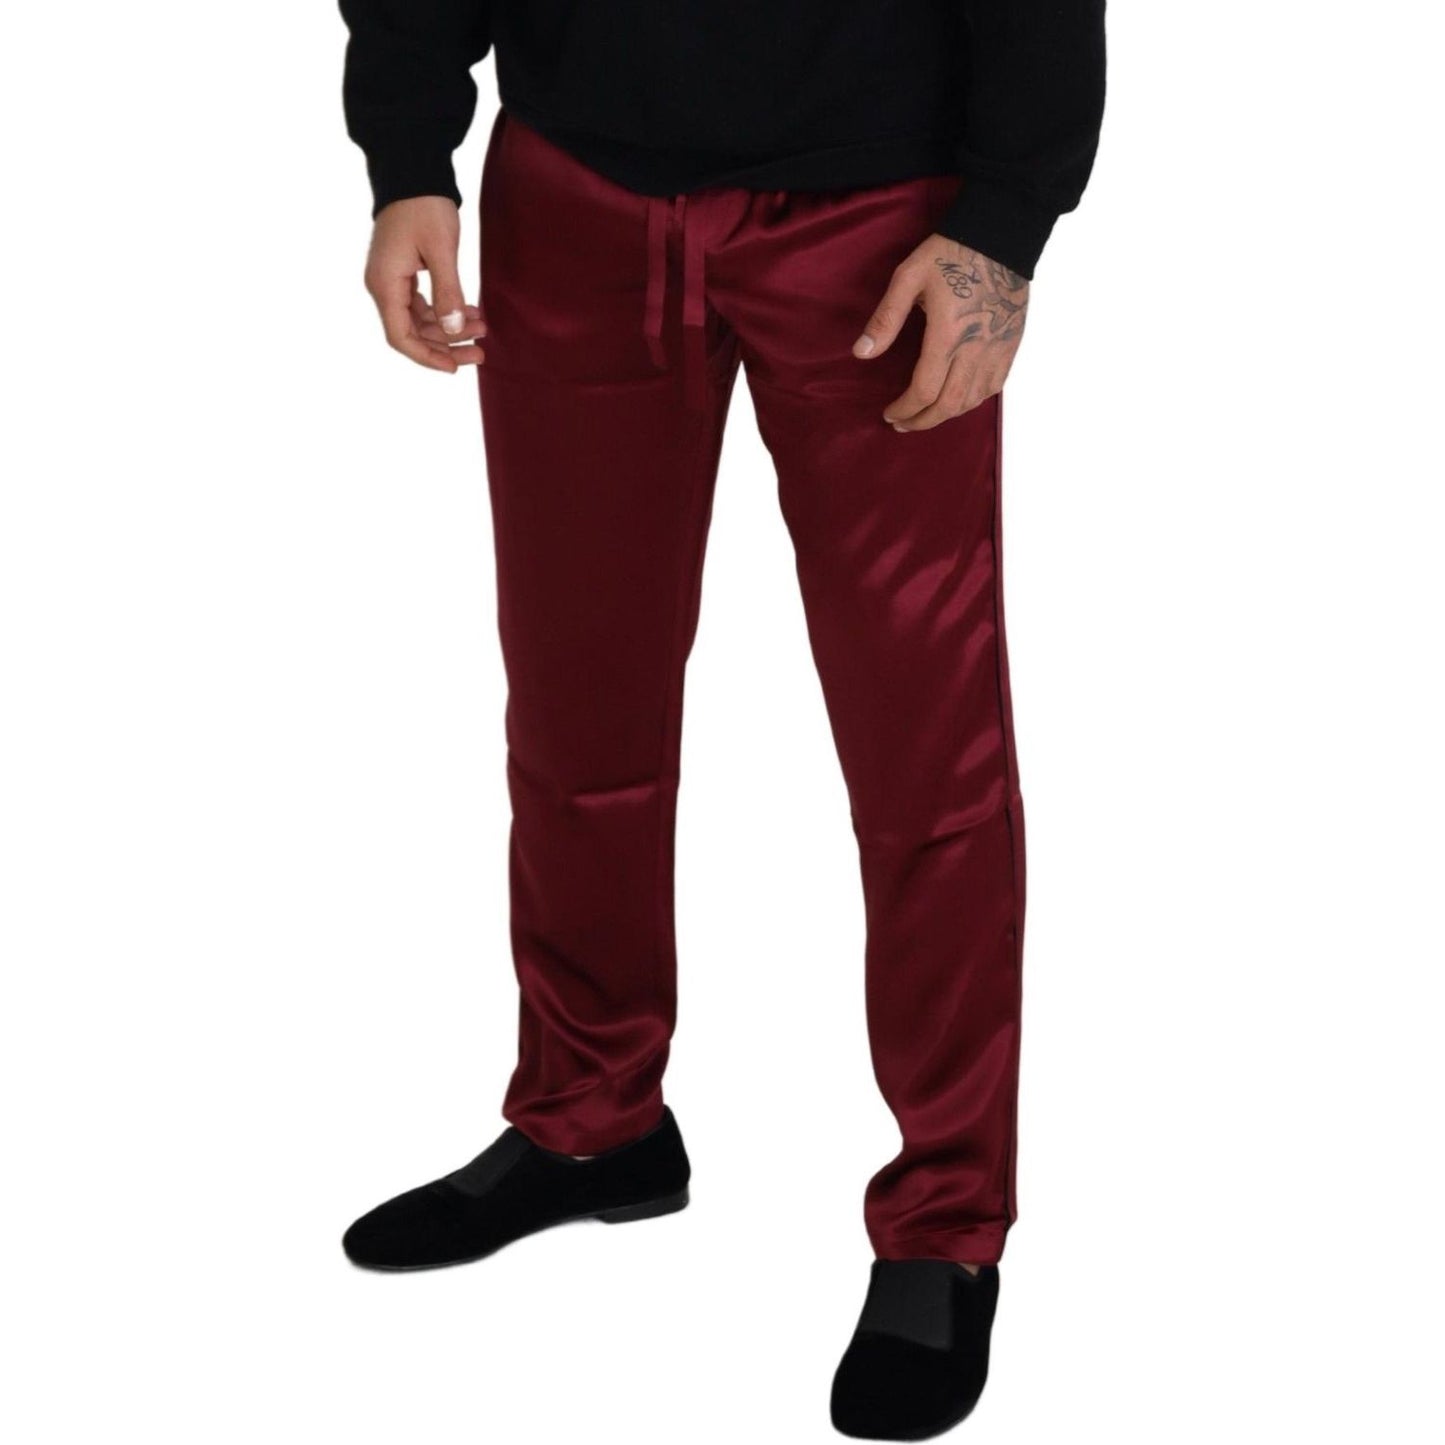 Dolce & Gabbana Silk Lounge Pants in Bordeaux Jeans & Pants bordeaux-silk-dg-sleep-lounge-pants IMG_7182-8338223b-d55.jpg